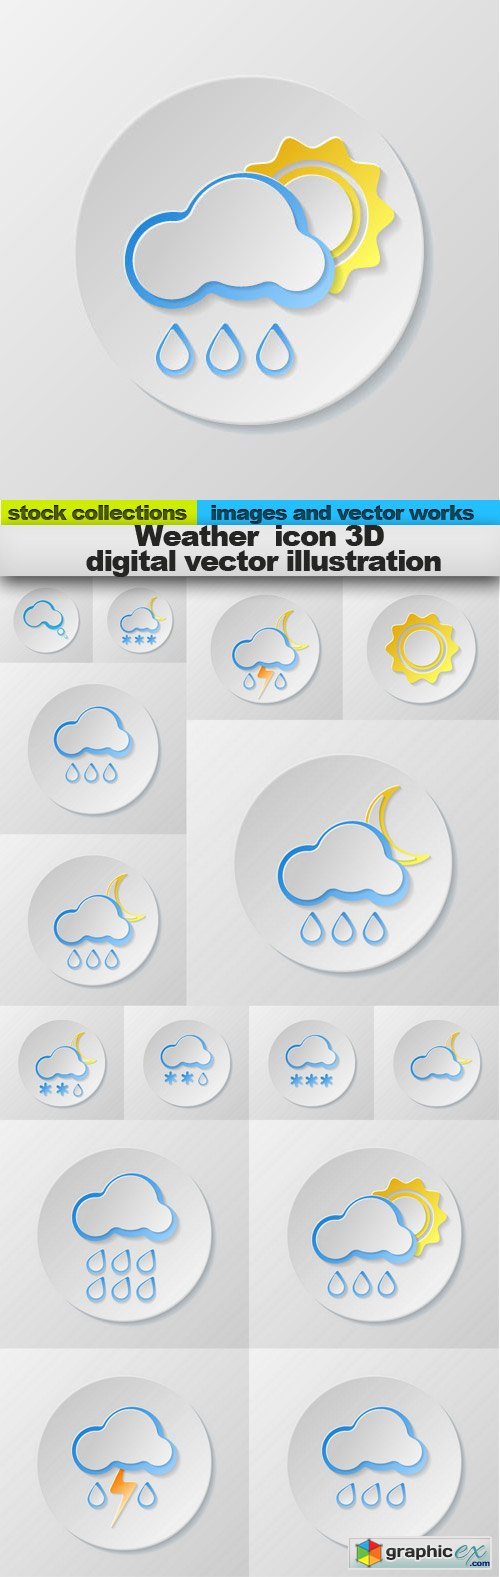 Weather icon 3D digital illustration, 15 x EPS